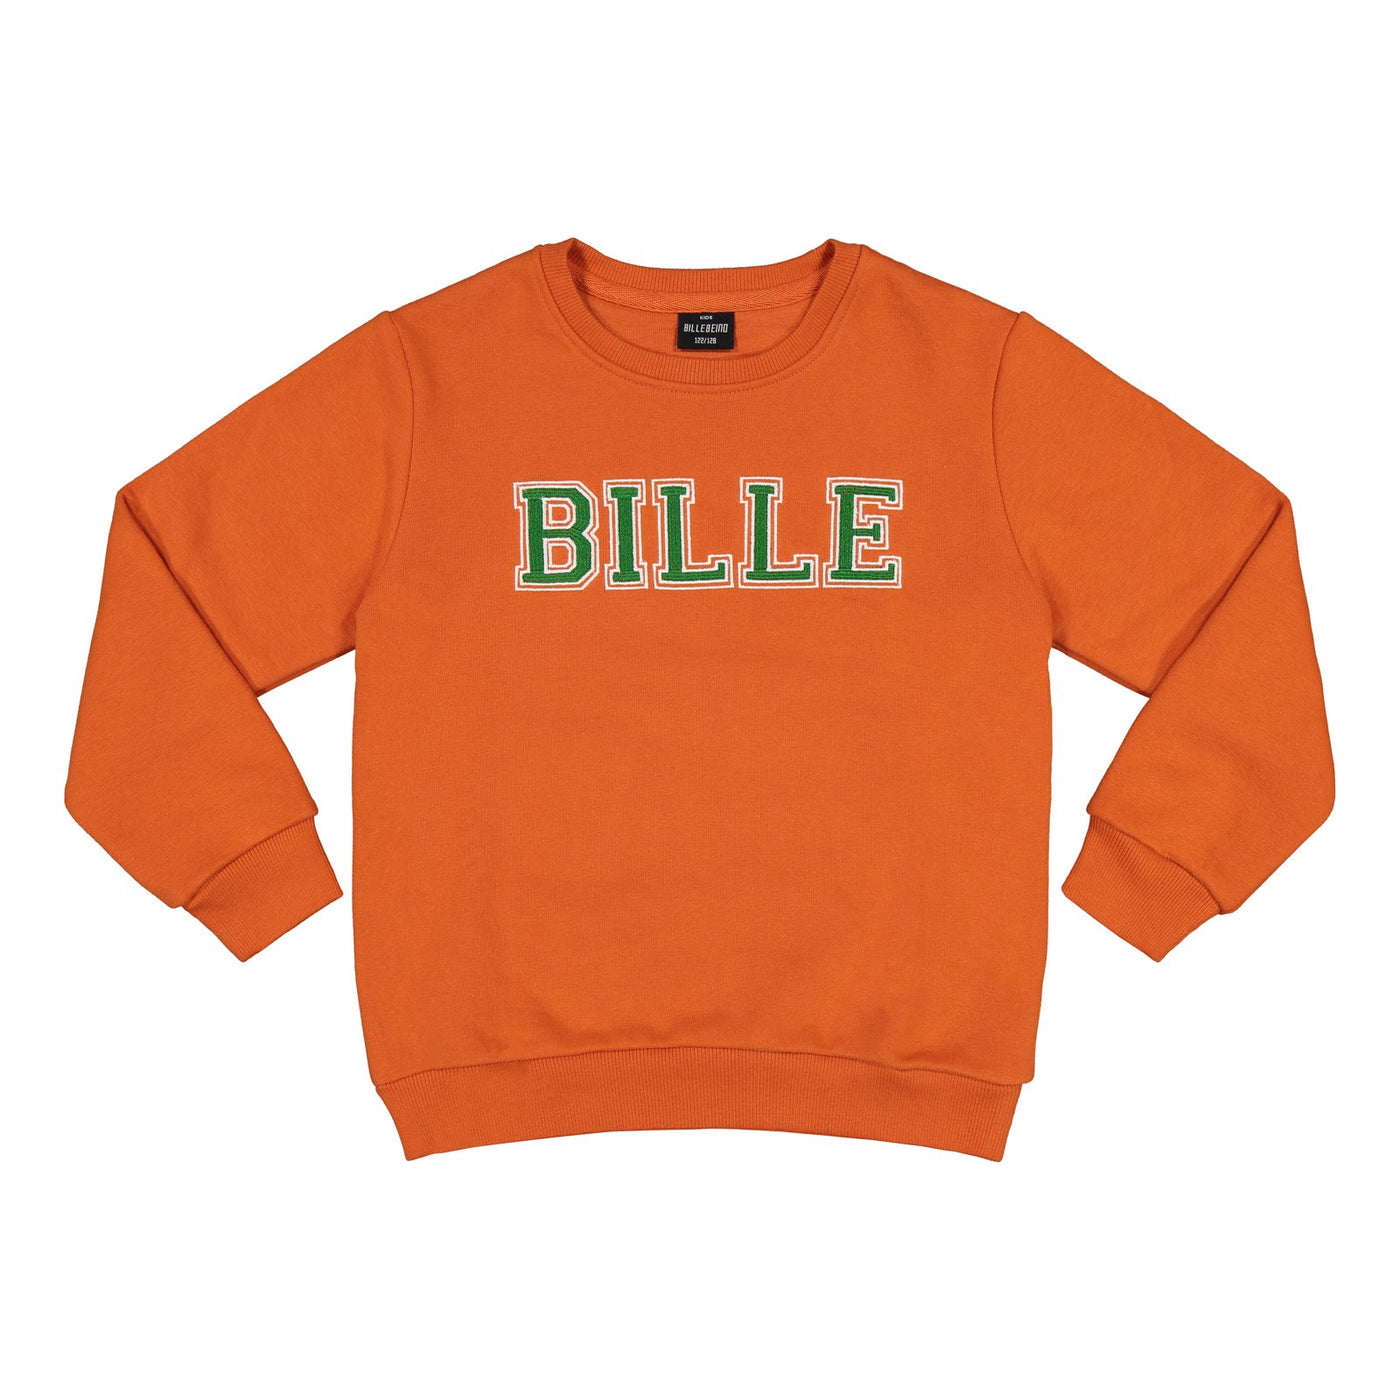 Kids Bille Sweatshirt